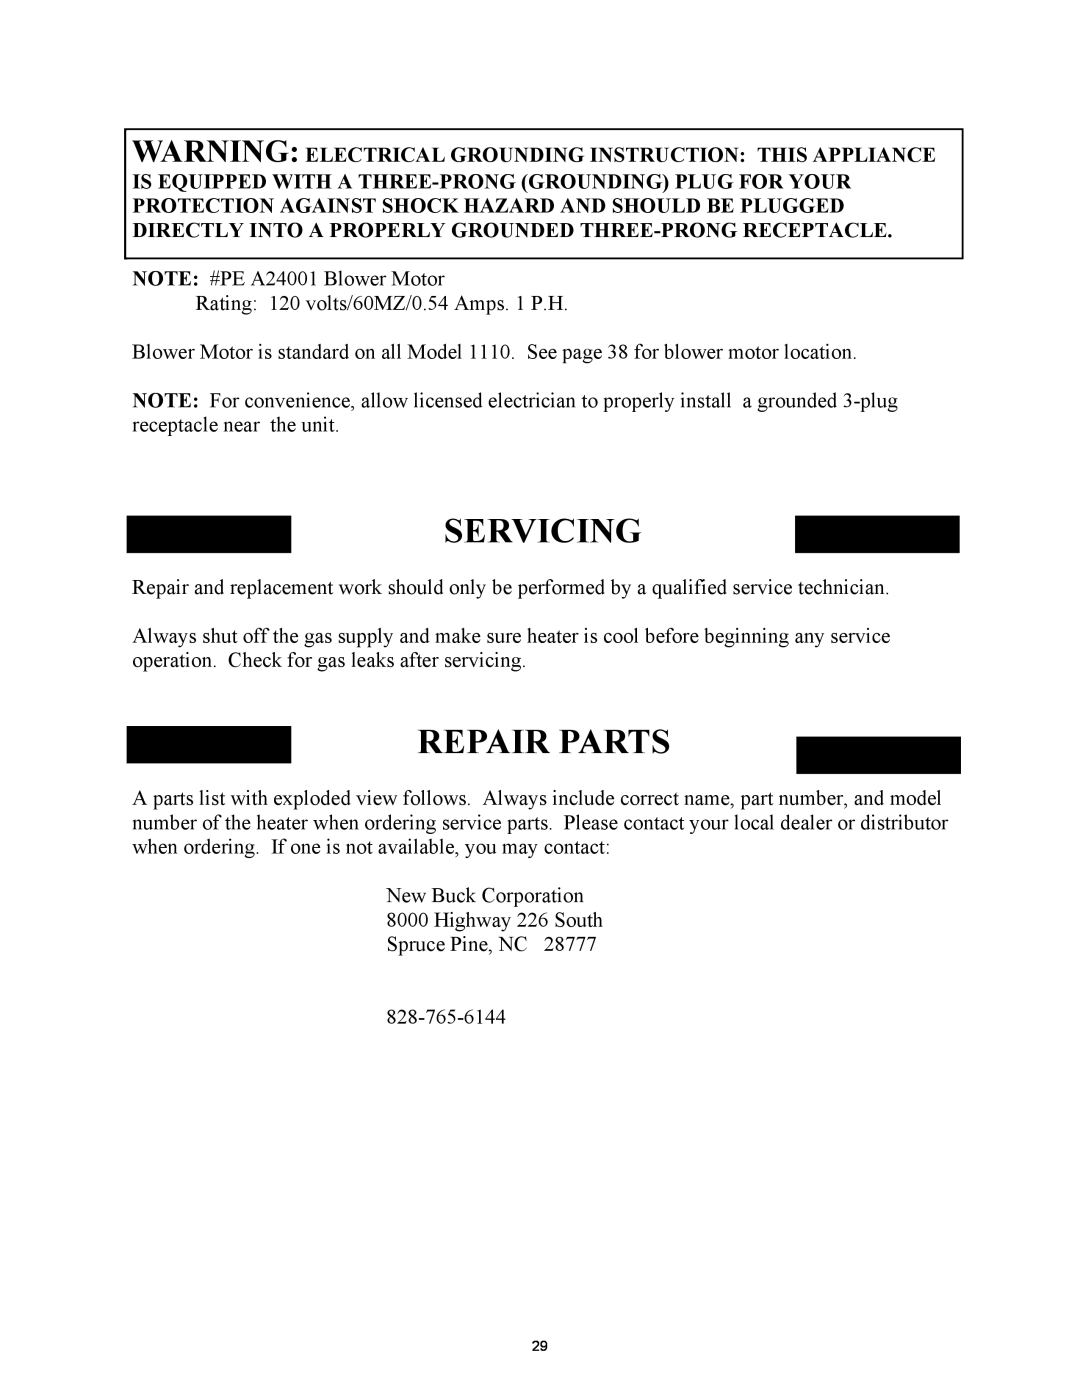 New Buck Corporation 1110 manual Servicing, Repair Parts 